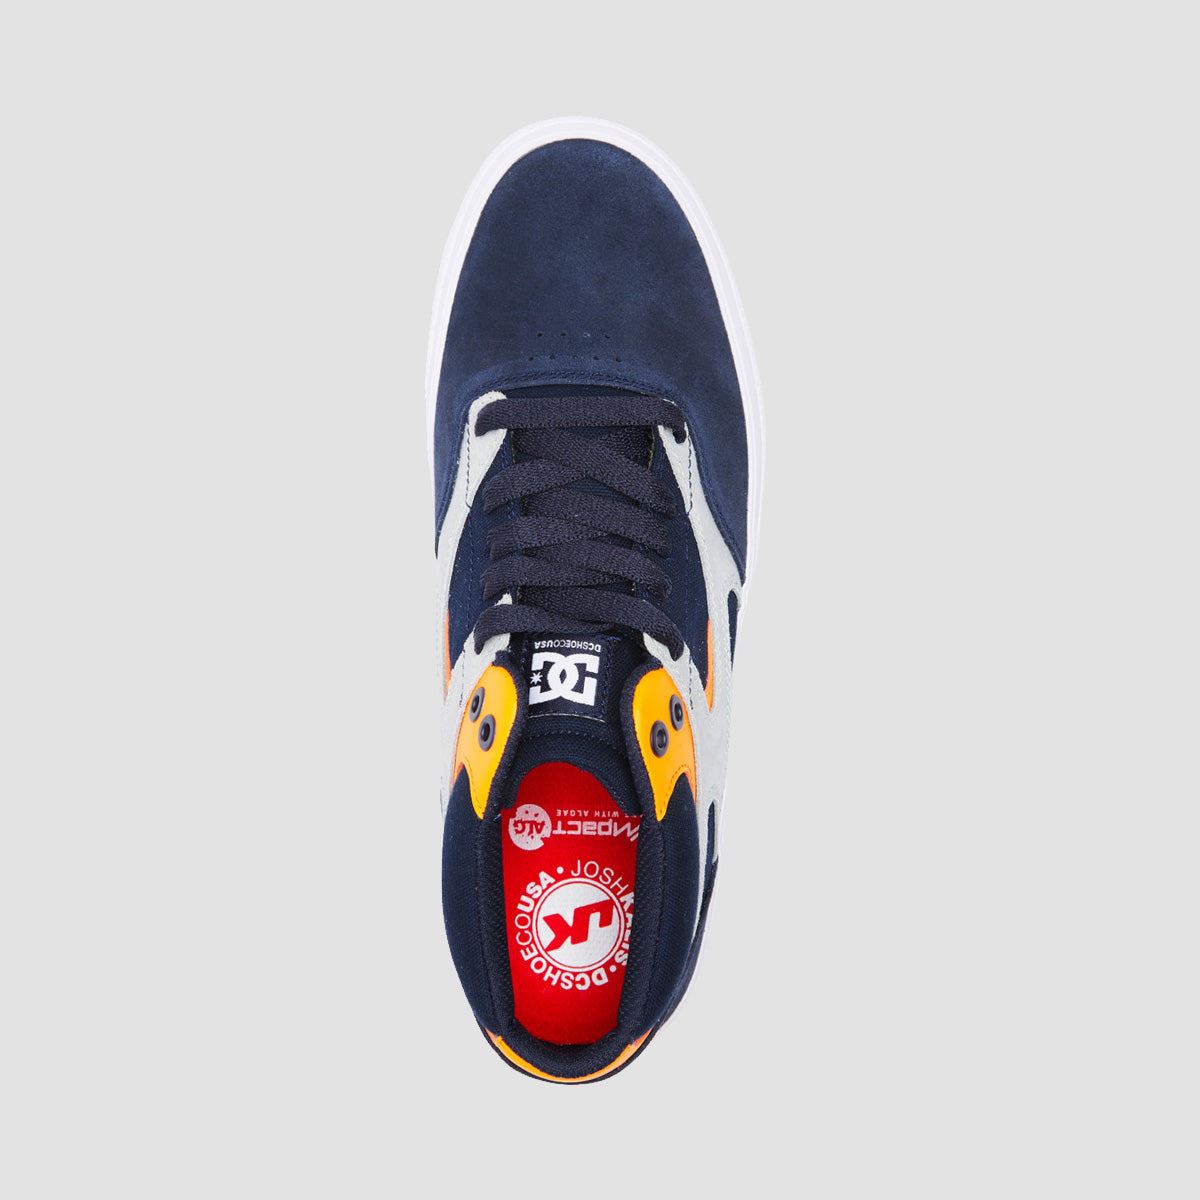 DC Kalis Vulc Mid S Shoes - Navy/Grey